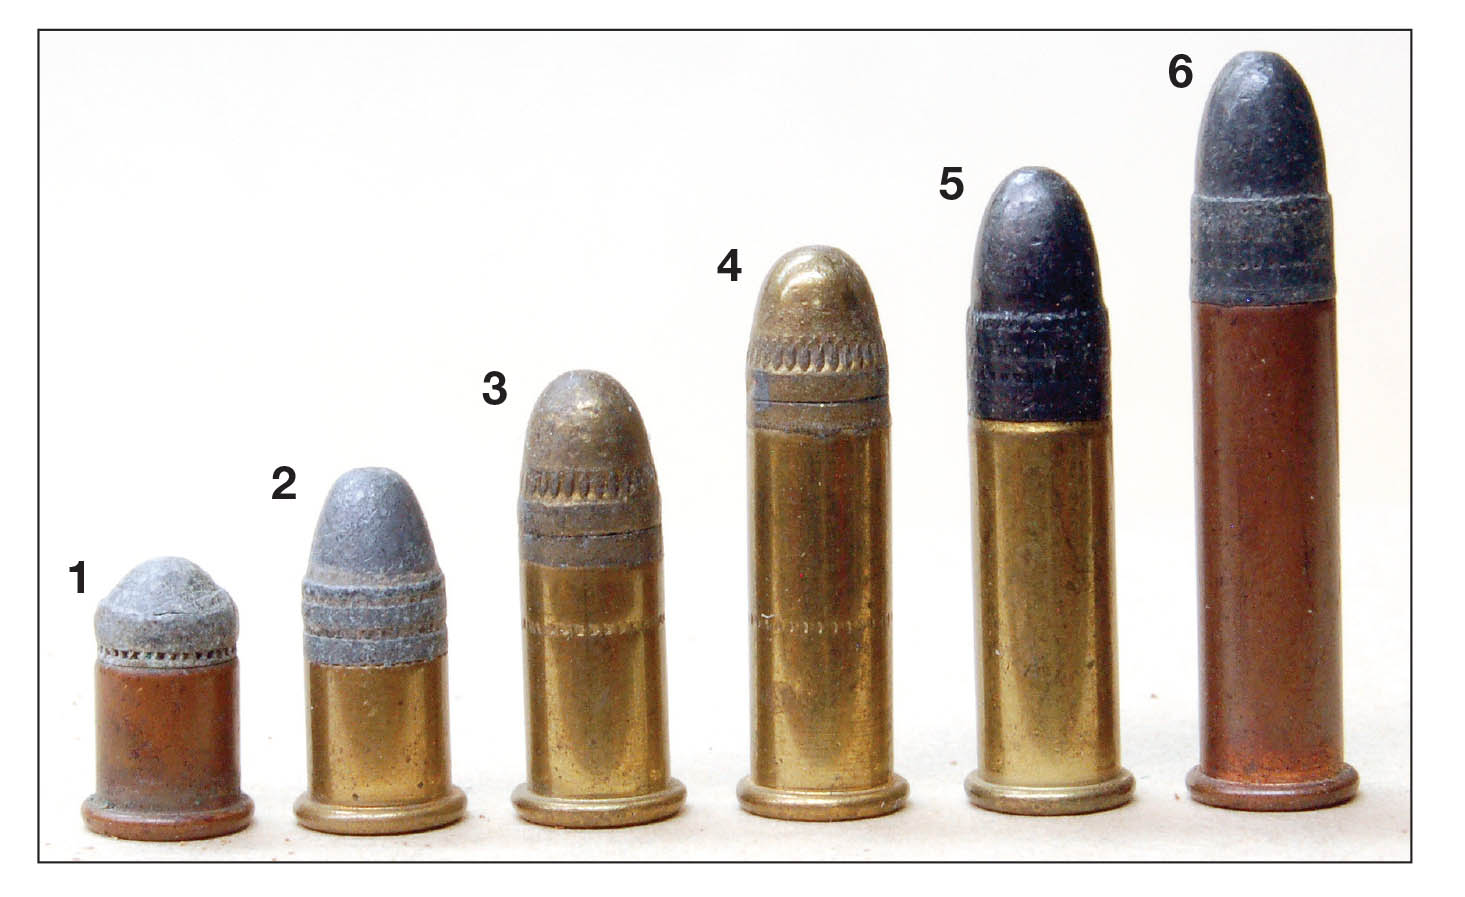 American .22 rimfire cartridges include the (1) BB Cap, (2) CB Cap, (3) Short, (4) Long, (5) Long Rifle and (6) Extra Long.